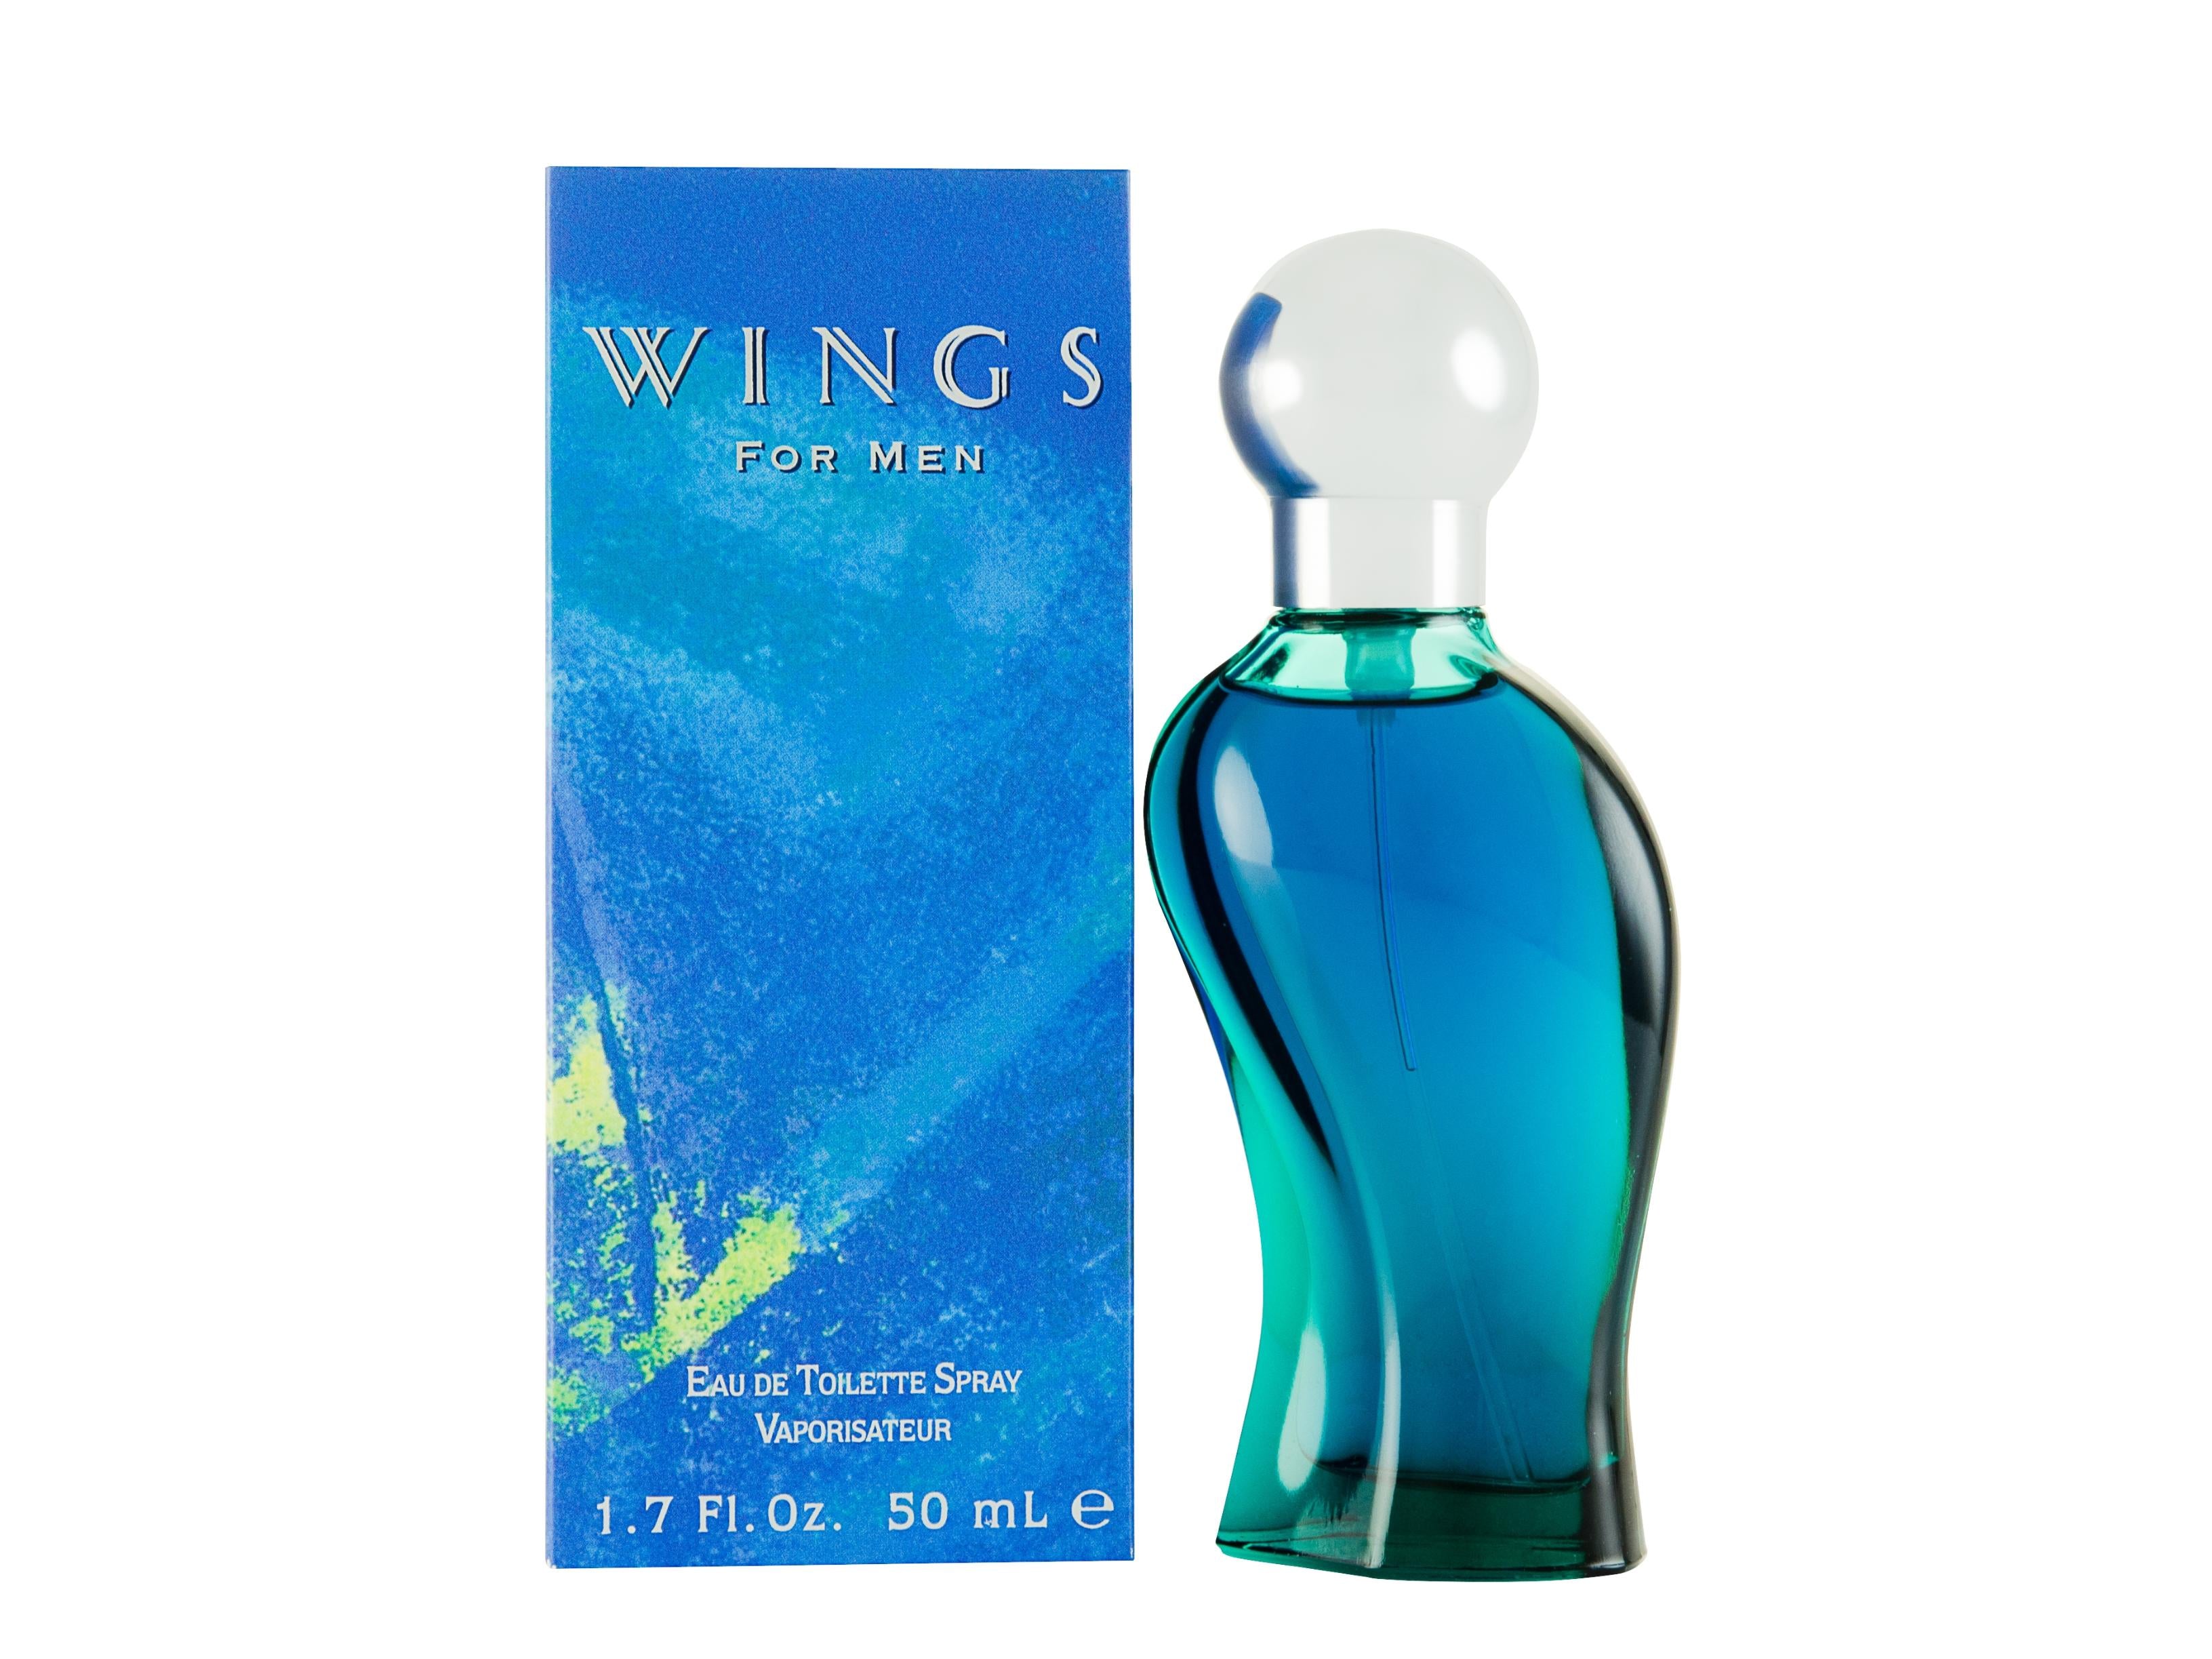 View Giorgio Beverly Hills Wings for Men Eau de Toilette 50ml Spray information